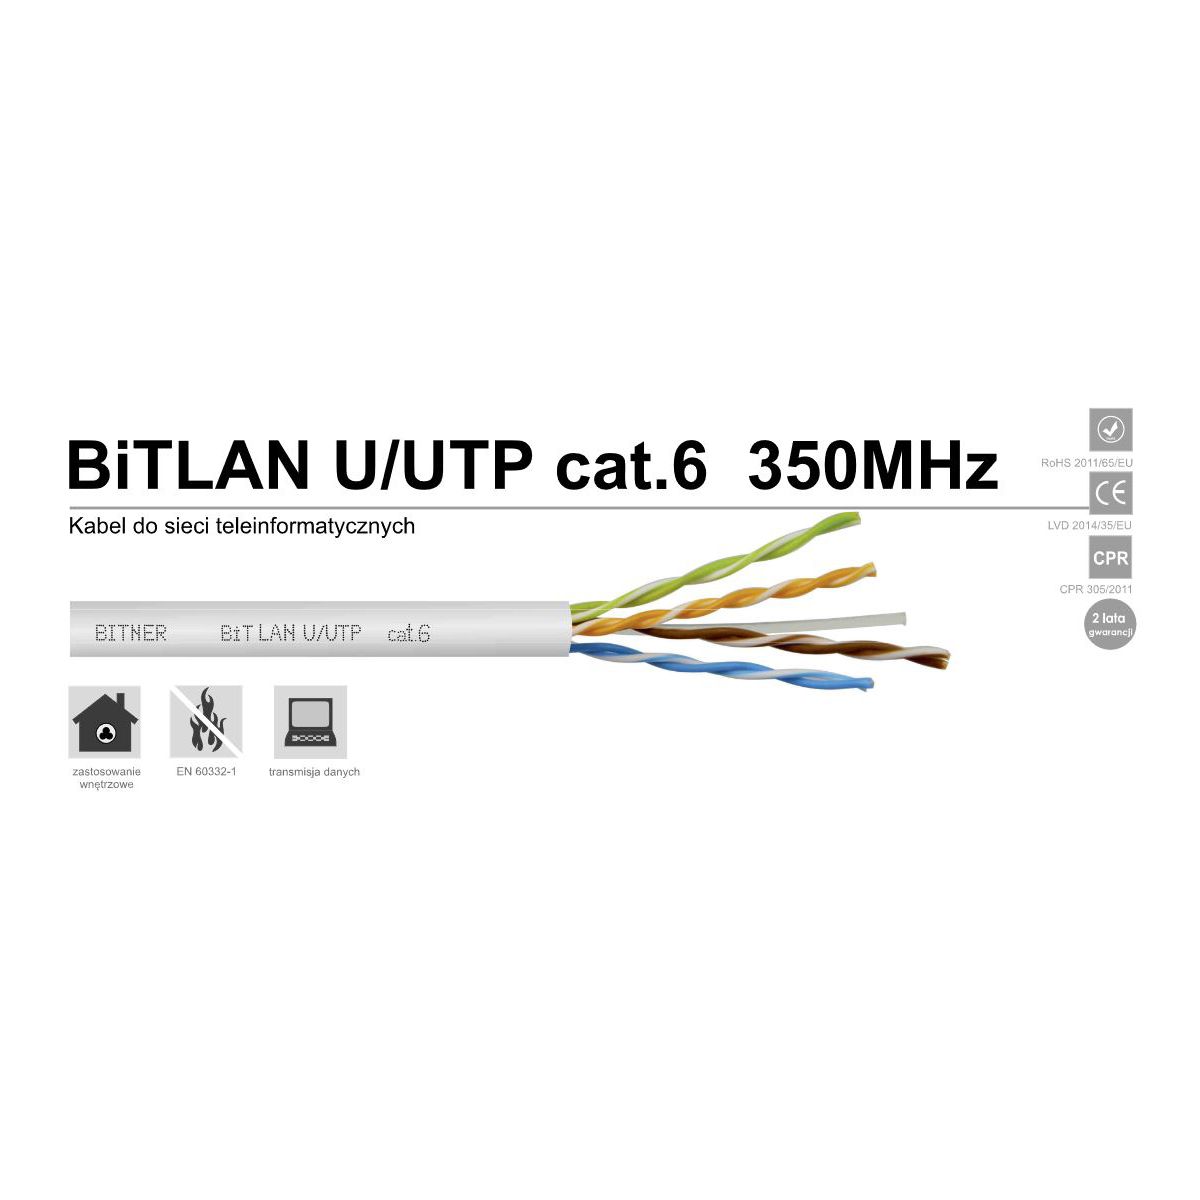 Kabel BiTLAN U/UTP cat.6 350MHz paczka 305 m.